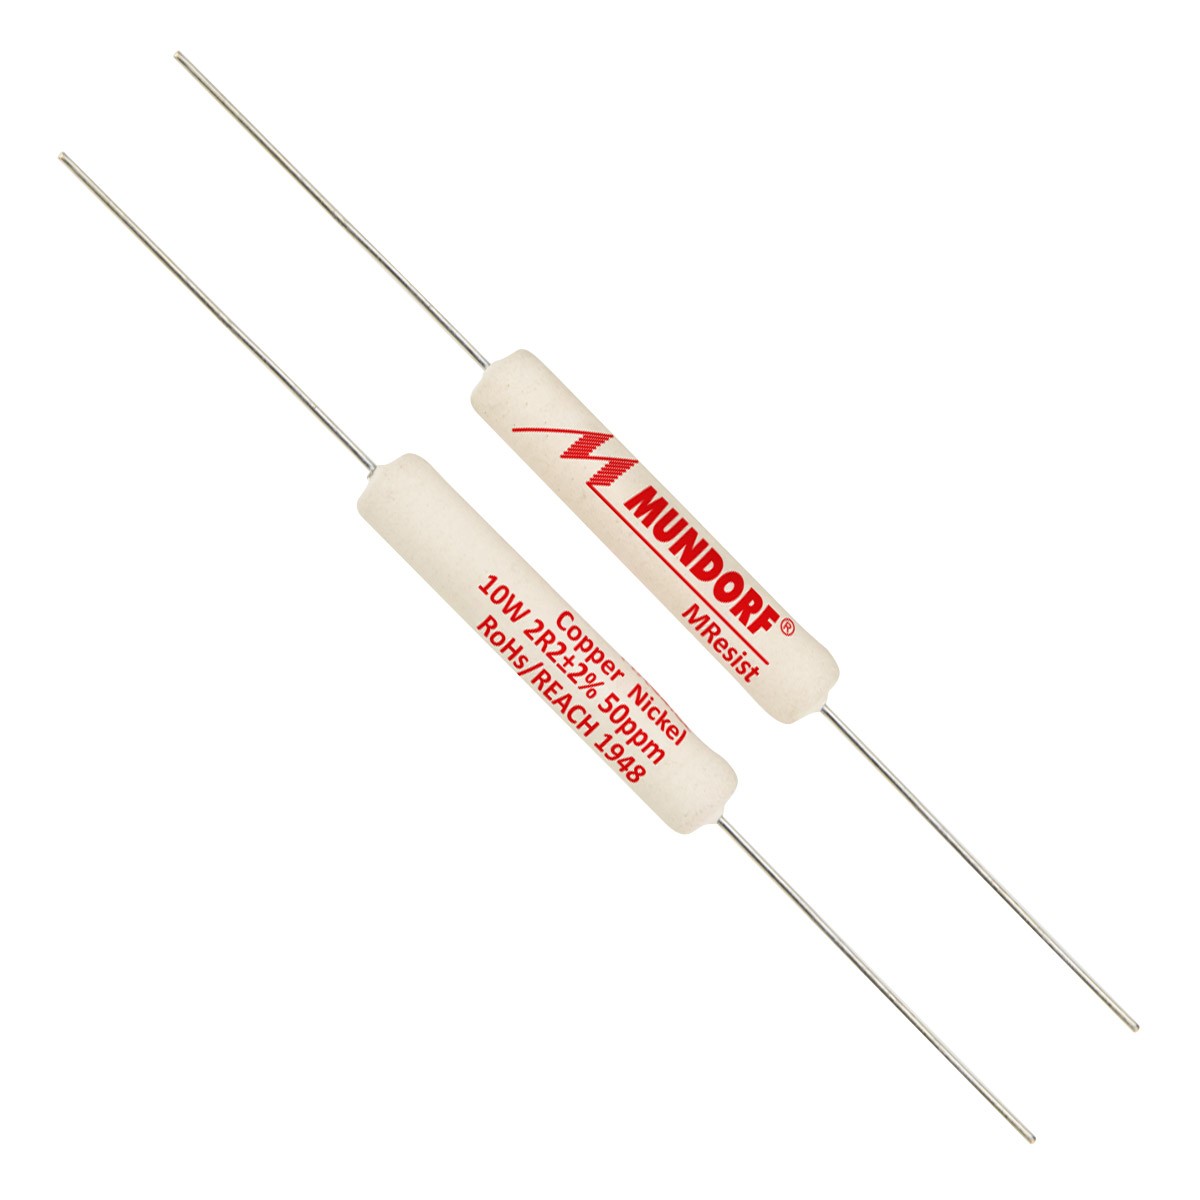 MUNDORF MRESIST CLASSIC Resistor 10W 22 Ohm